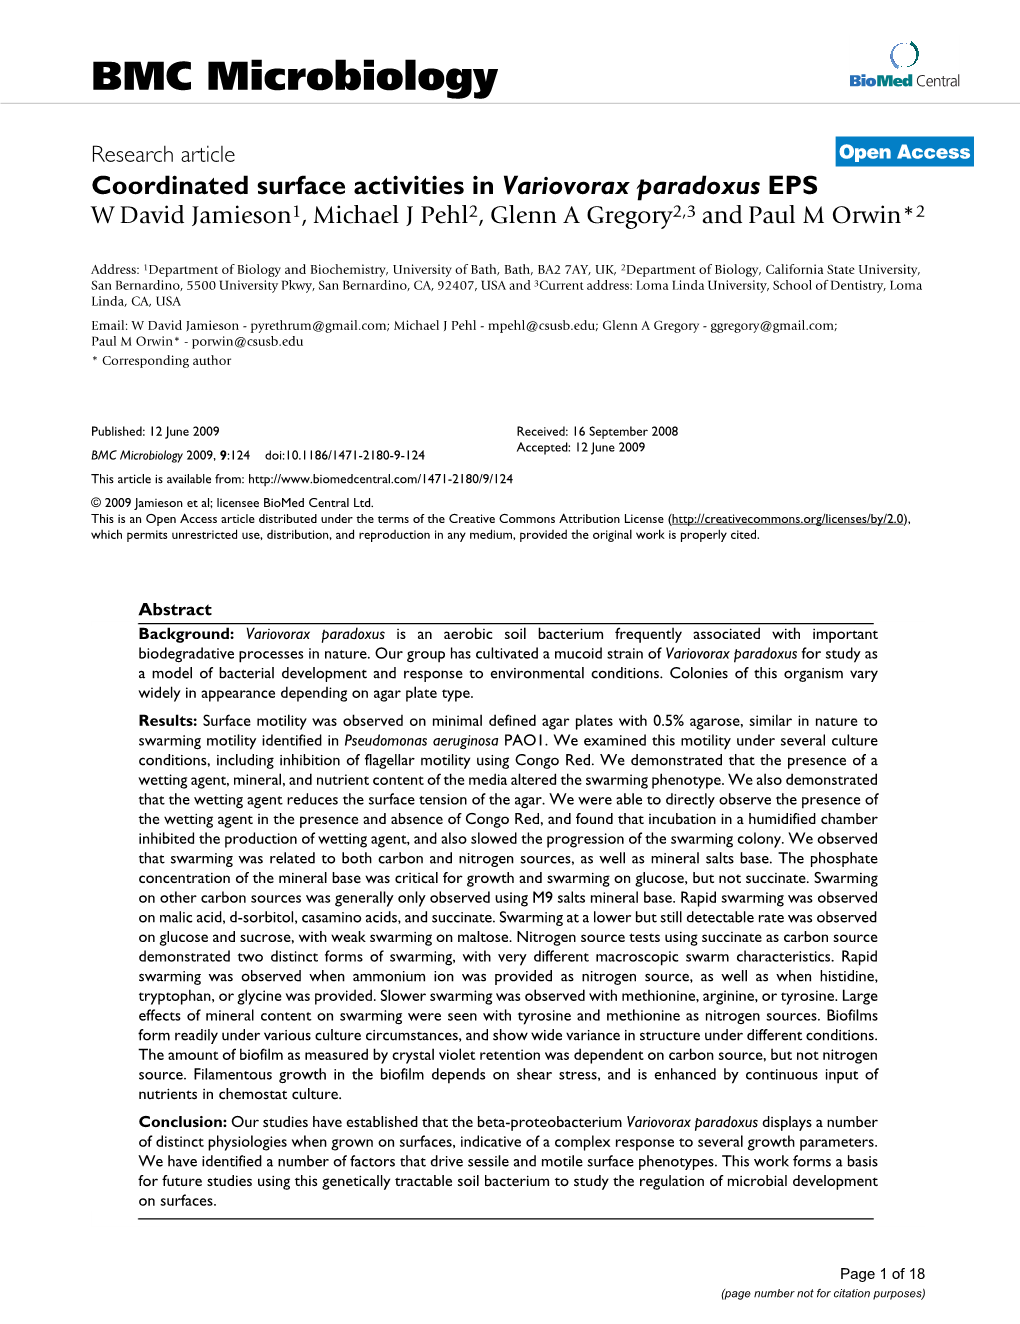 Coordinated Surface Activities in Variovorax Paradoxus EPS W David Jamieson1, Michael J Pehl2, Glenn a Gregory2,3 and Paul M Orwin*2